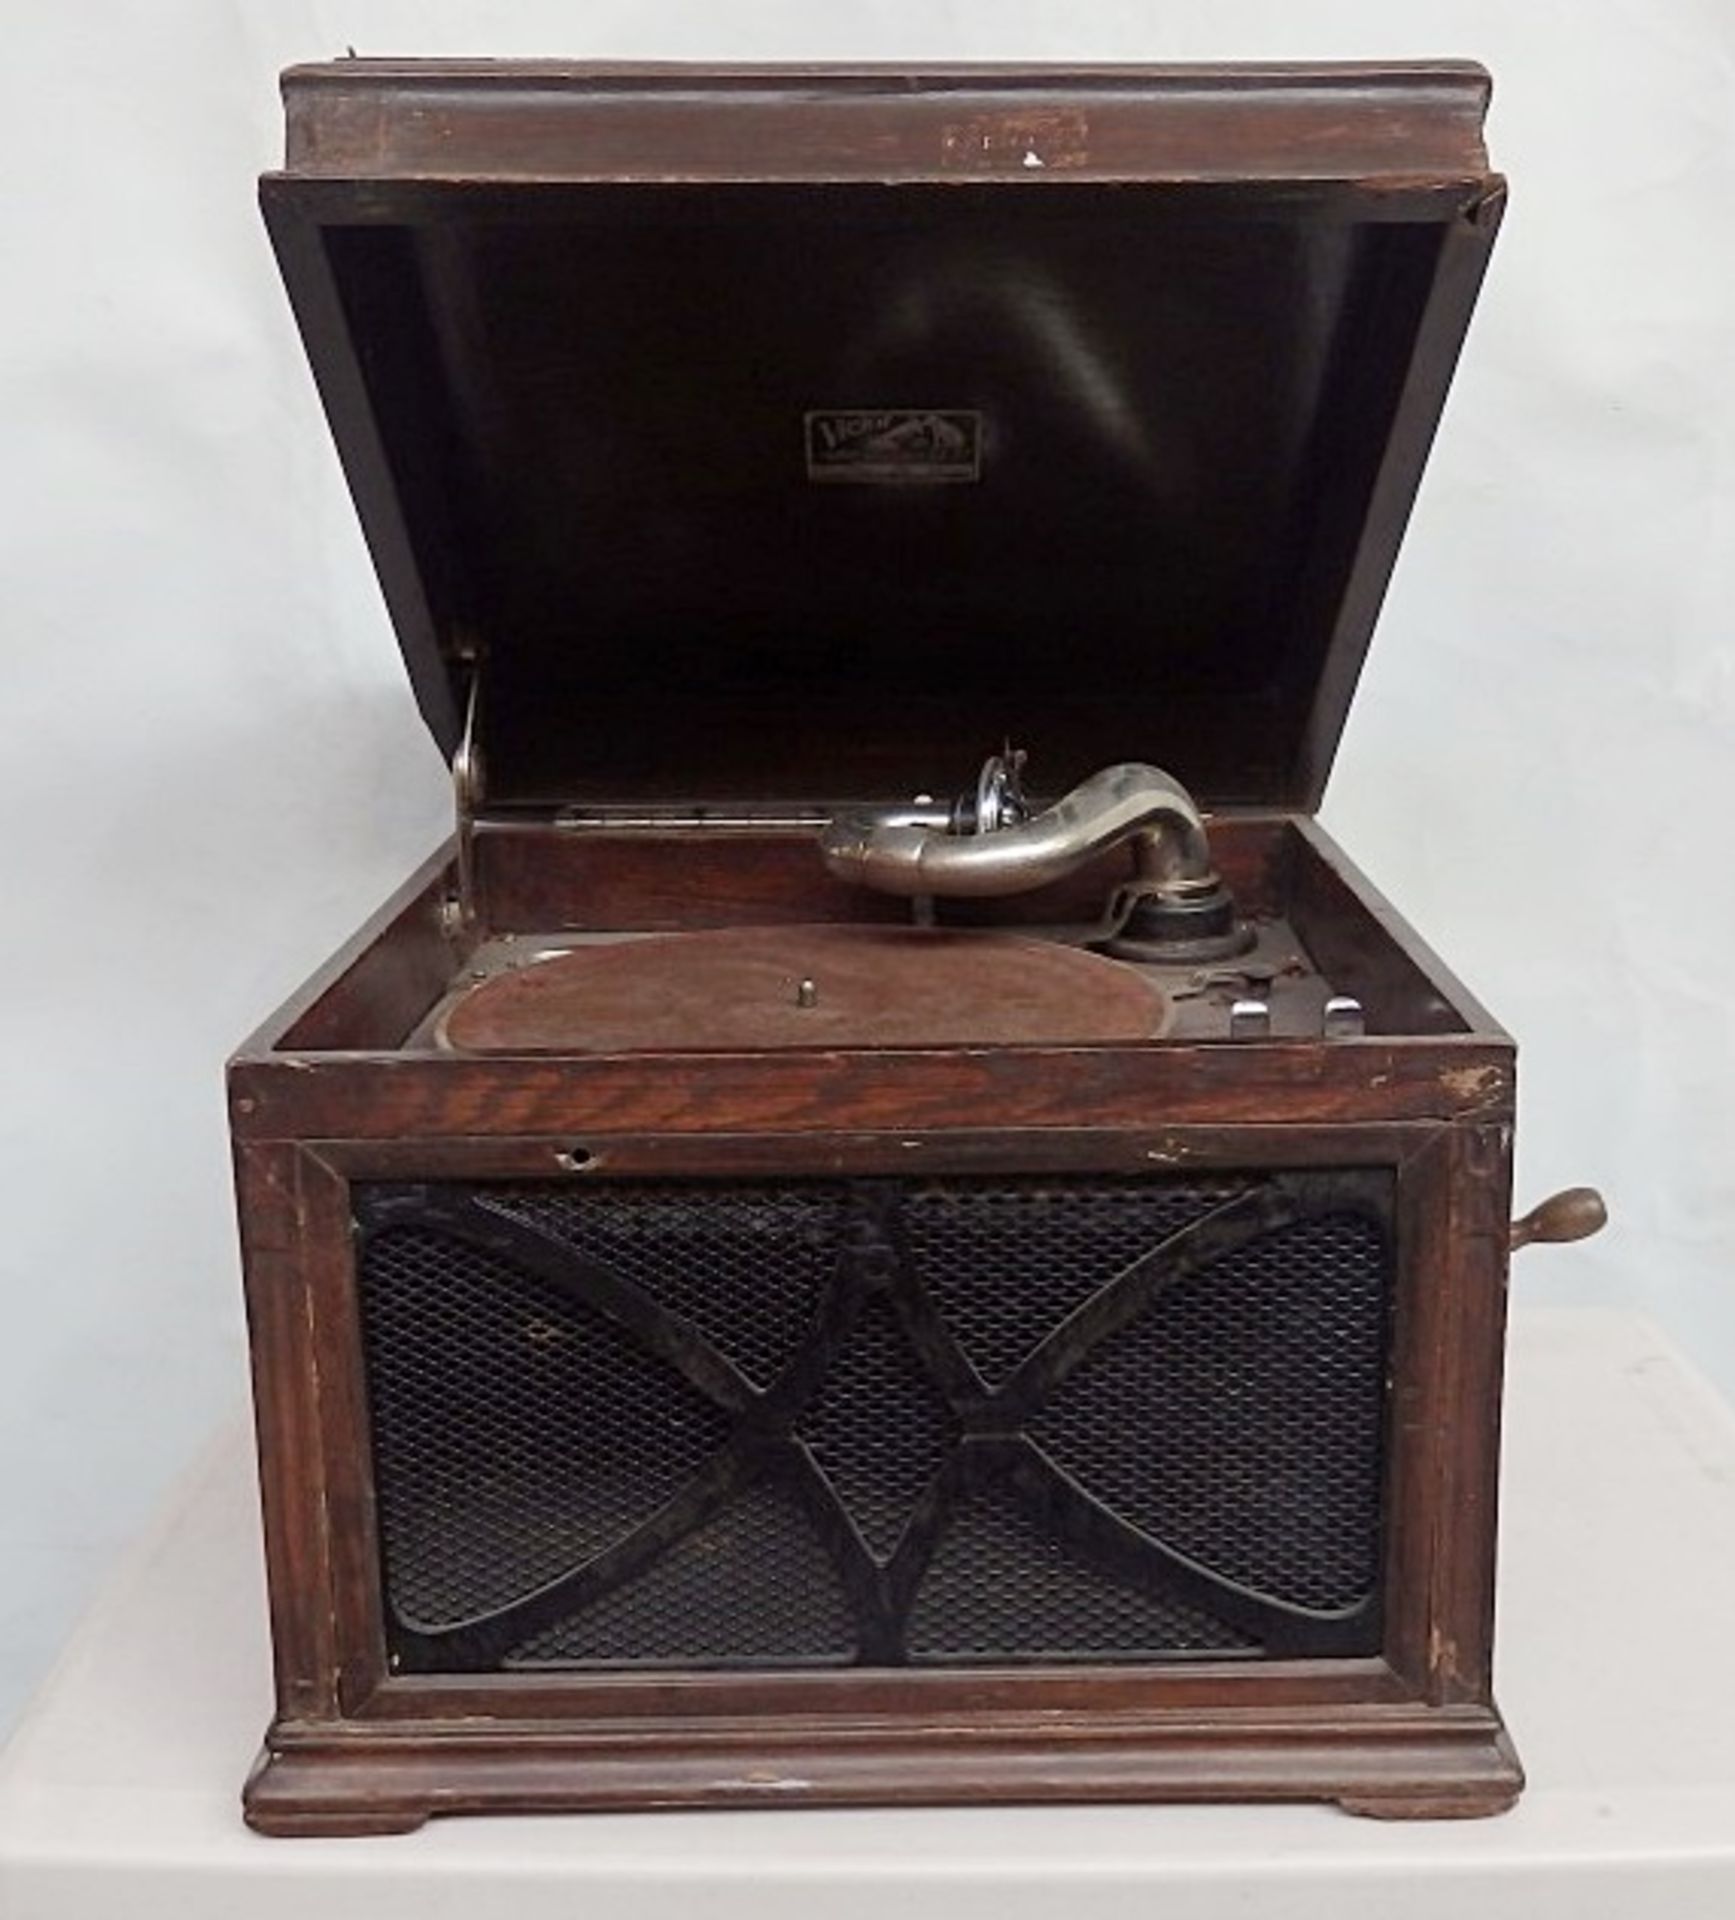 1 x Antique Victor Victrola "Talking Machine" Cabinet Gramophone (Circa 1917) - Crank Operated -